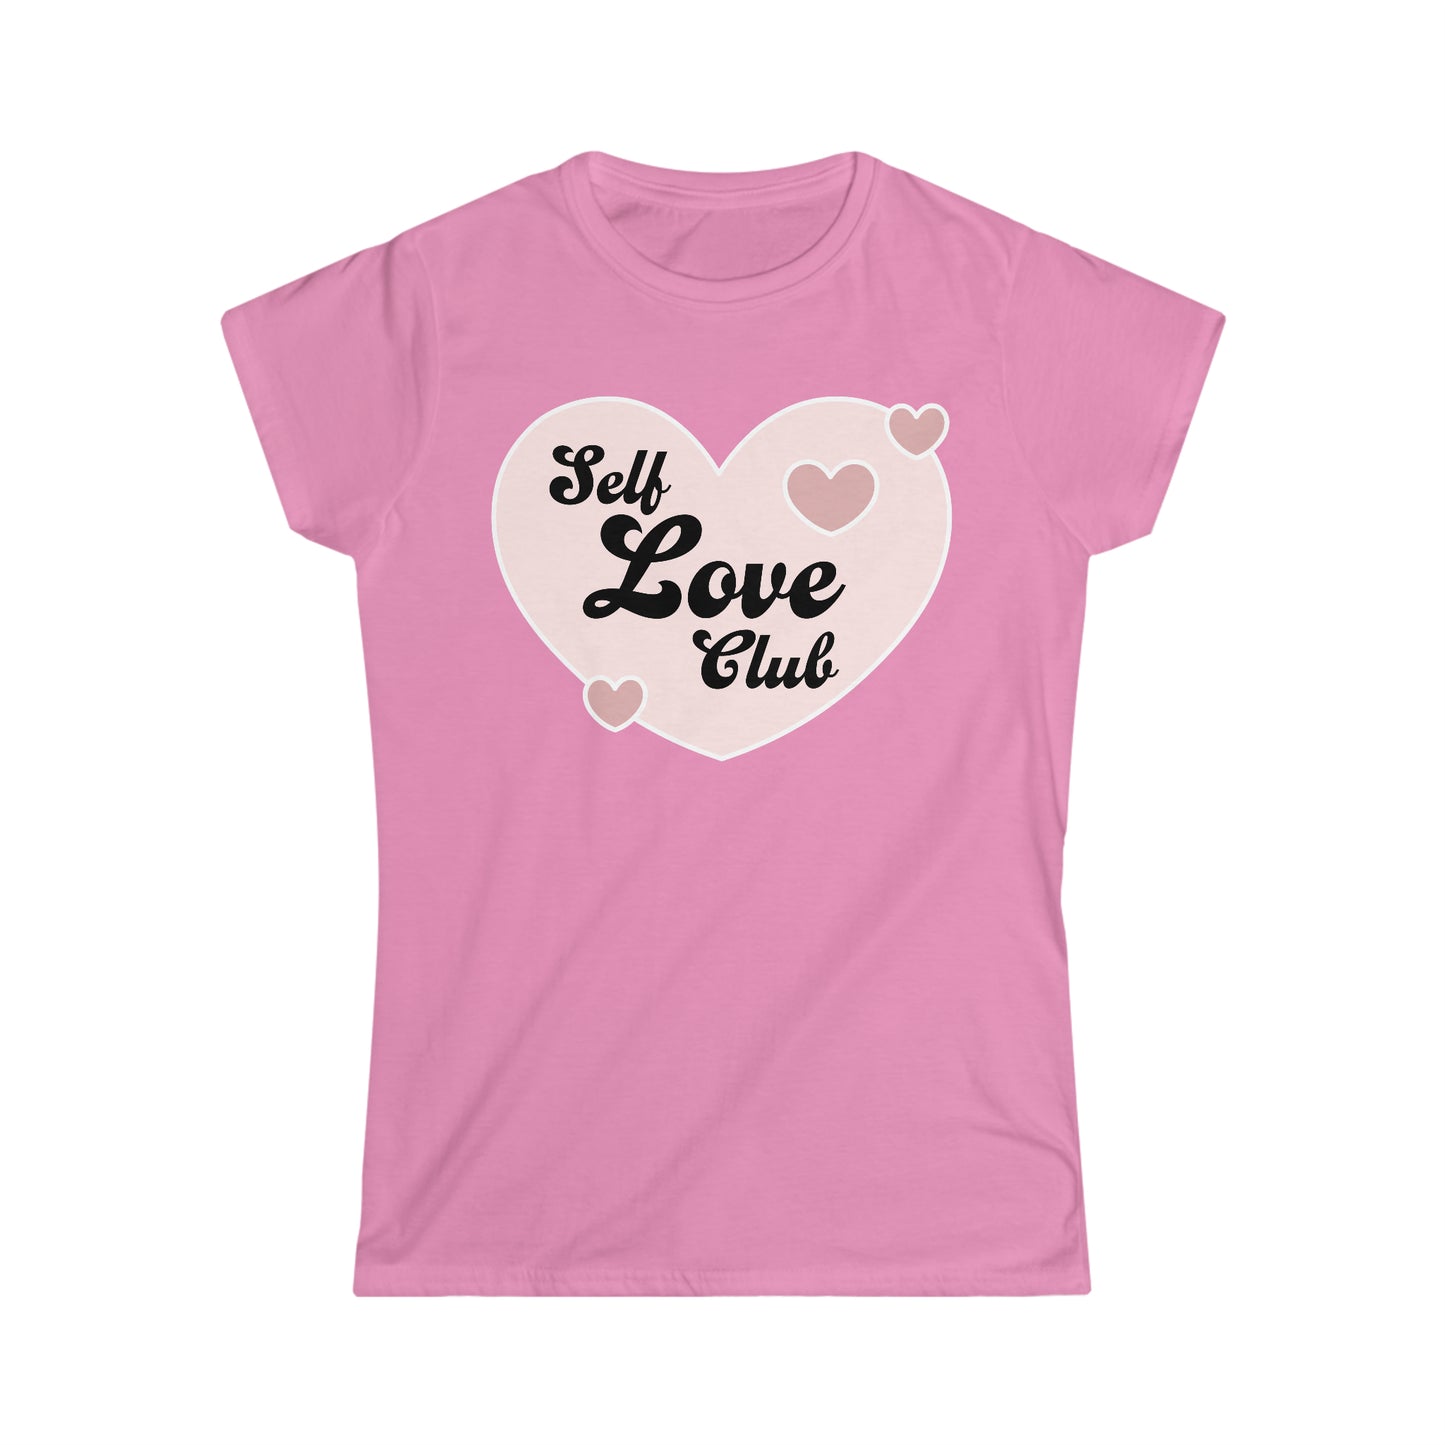 Camiseta - Amor Propio / Self Love Club - Women's Softstyle Tee